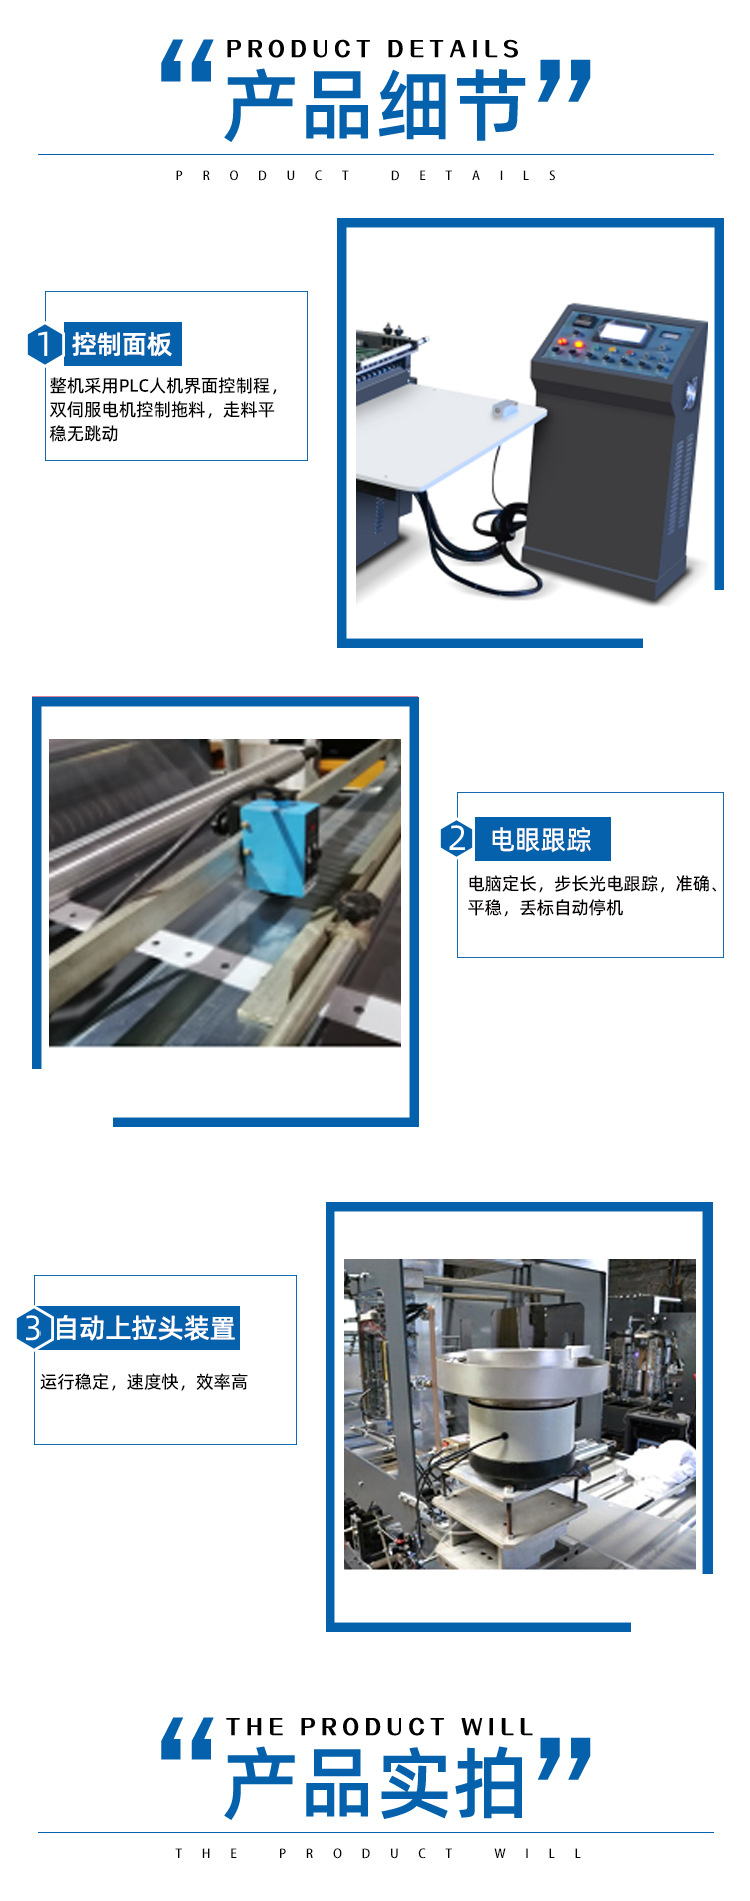 Juniu Machinery 1000 Upper Zipper Head Bag Making Machine Fully Automatic Soft Handheld Bag Making Equipment Manufacturer